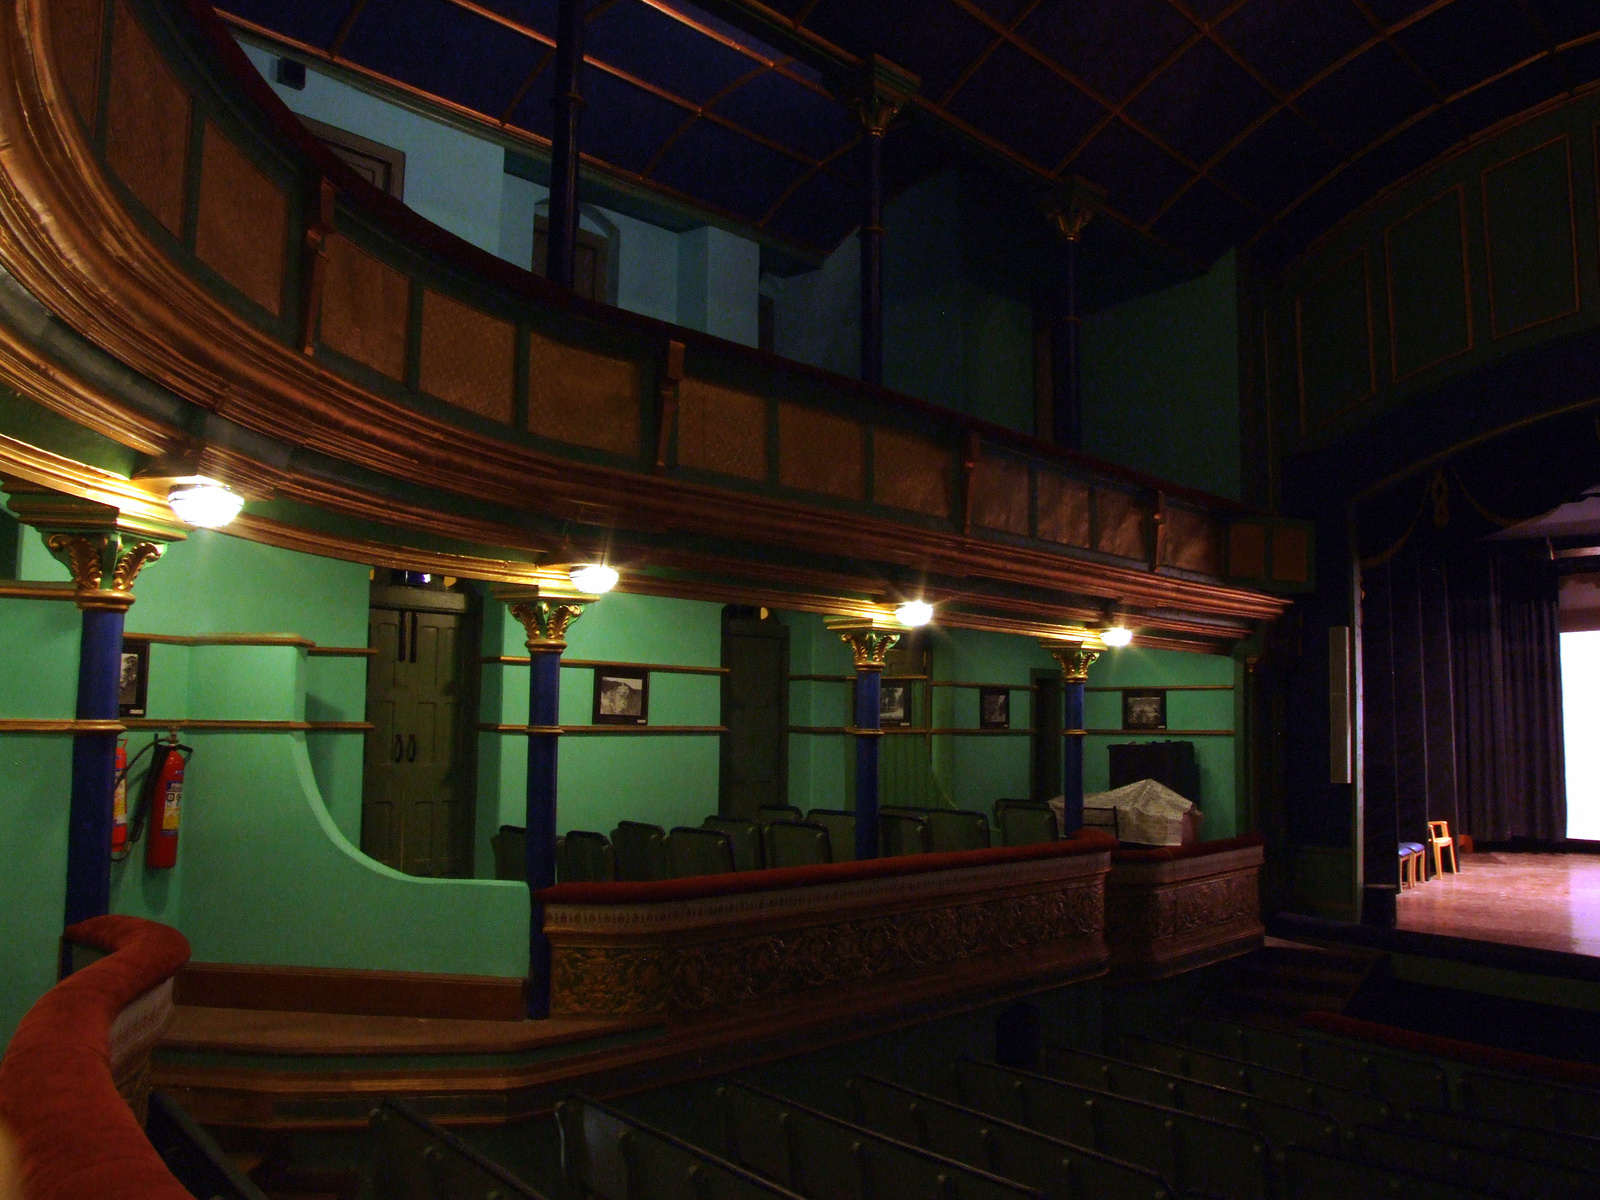 Shimla - Gaiety Theatre 1